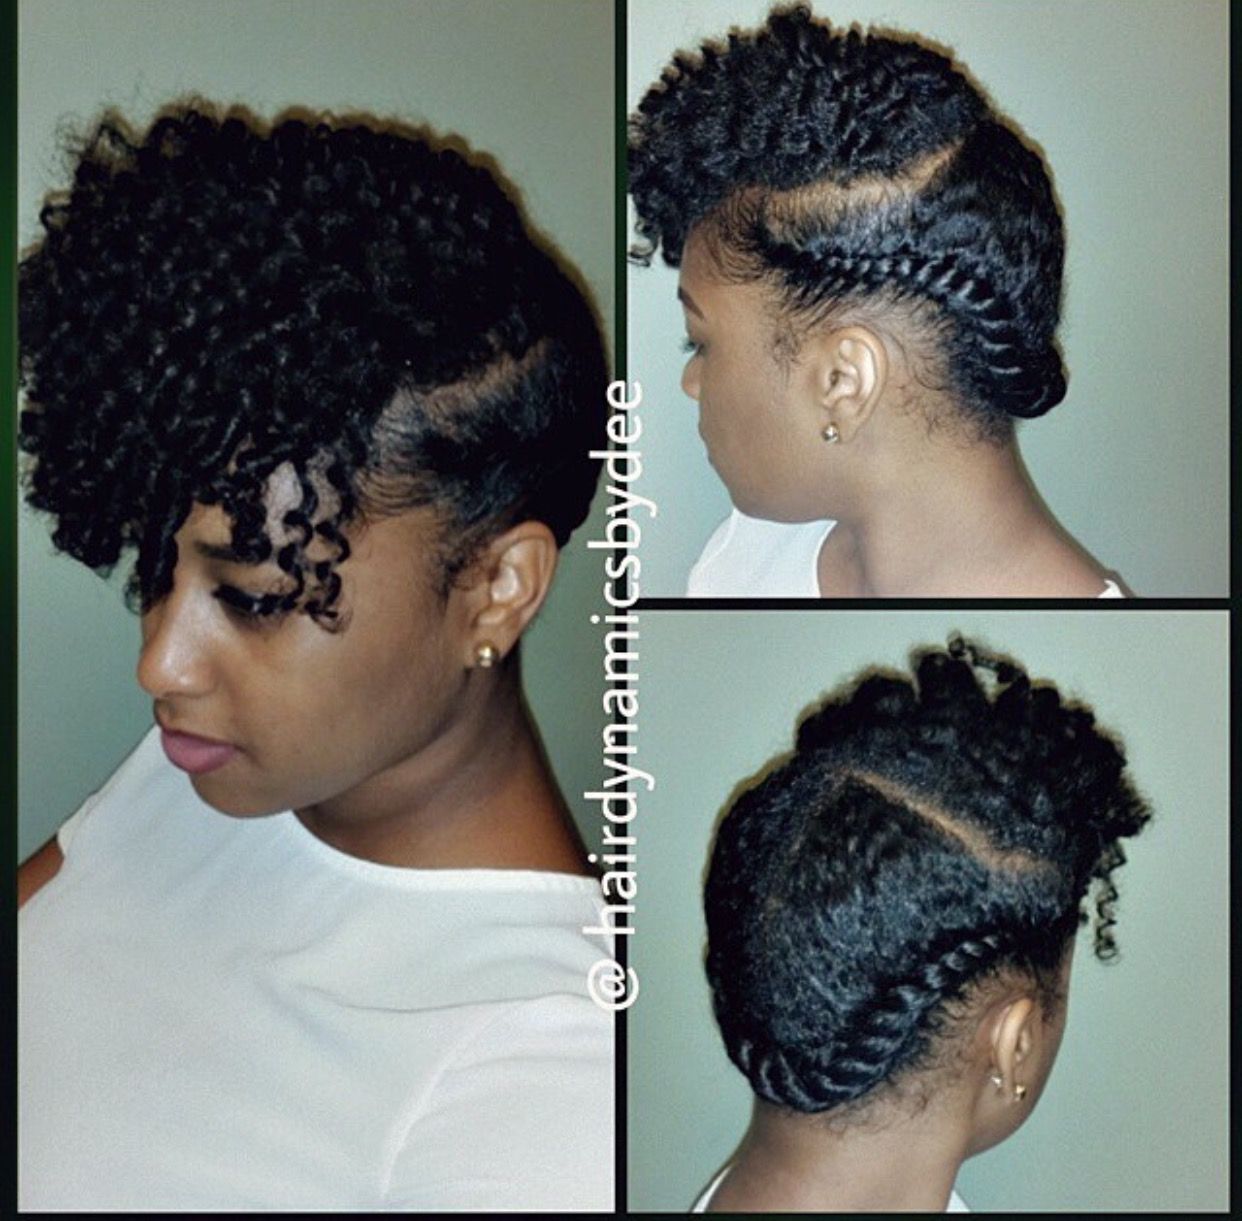 Natural black hairstyles for women hairstyleforblackwomen.net 20